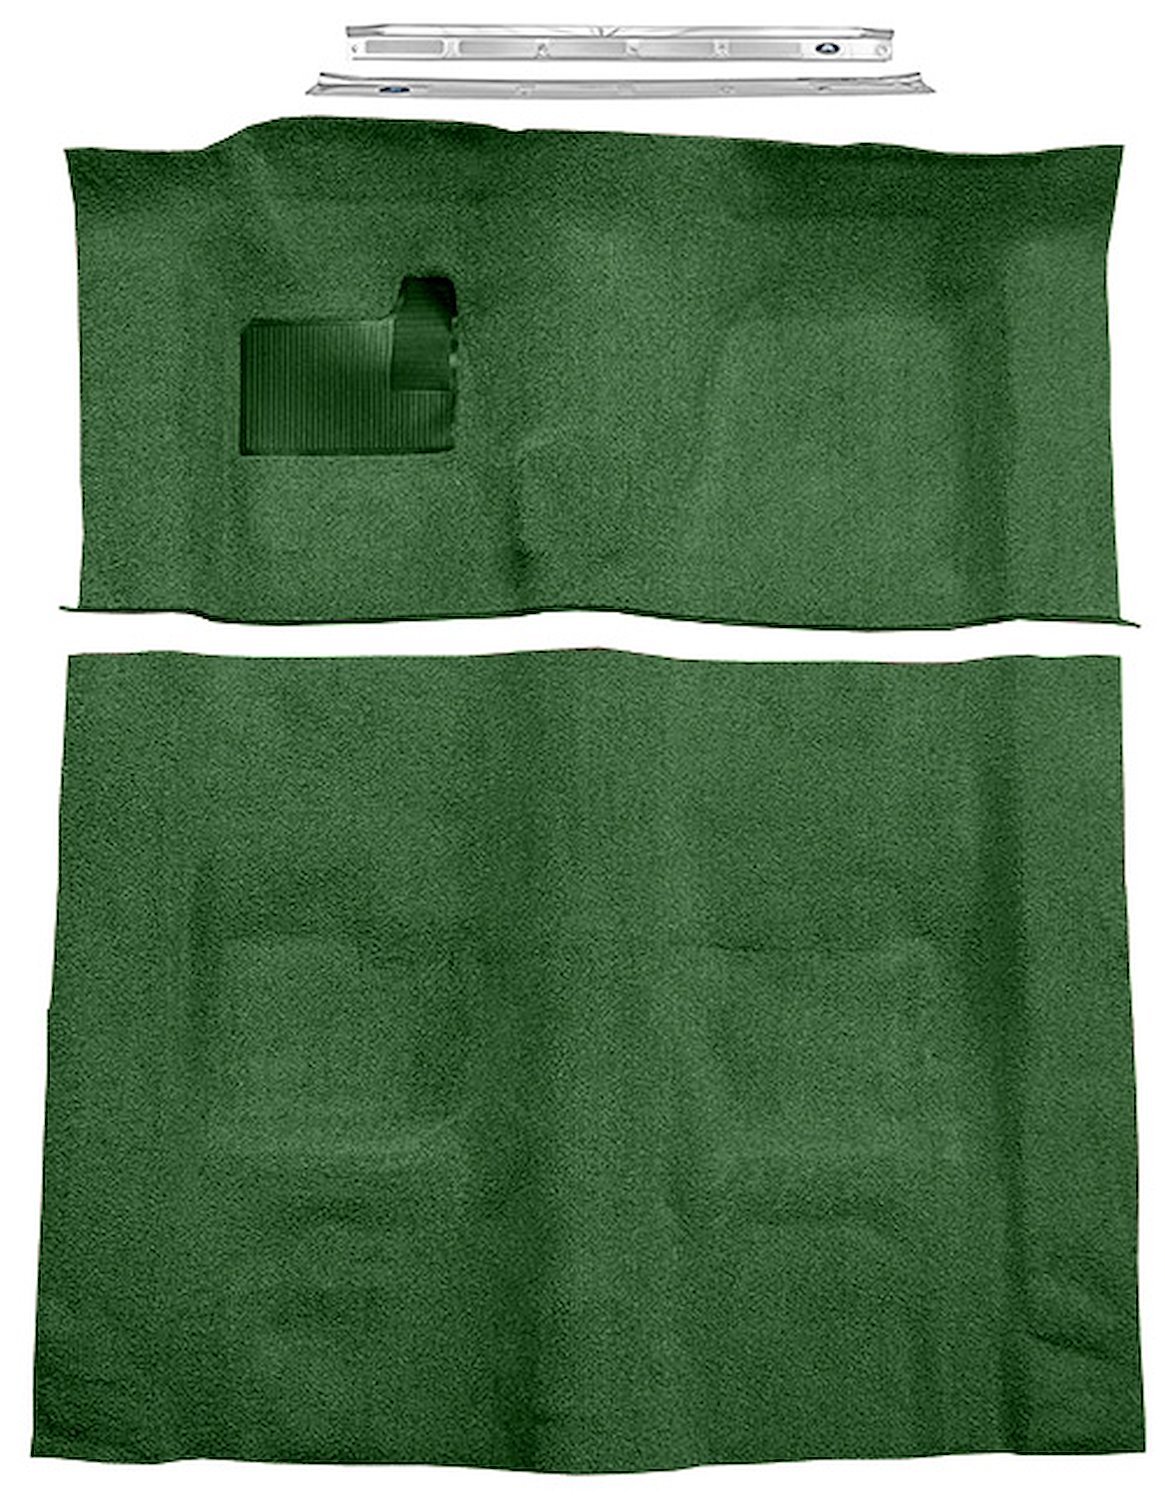 Dark Green Molded Cut Pile Carpet Kit w/Door Sill Plates for 1970-1973 Chevy Camaro, Pontiac Firebird [4-Speed Transmission]